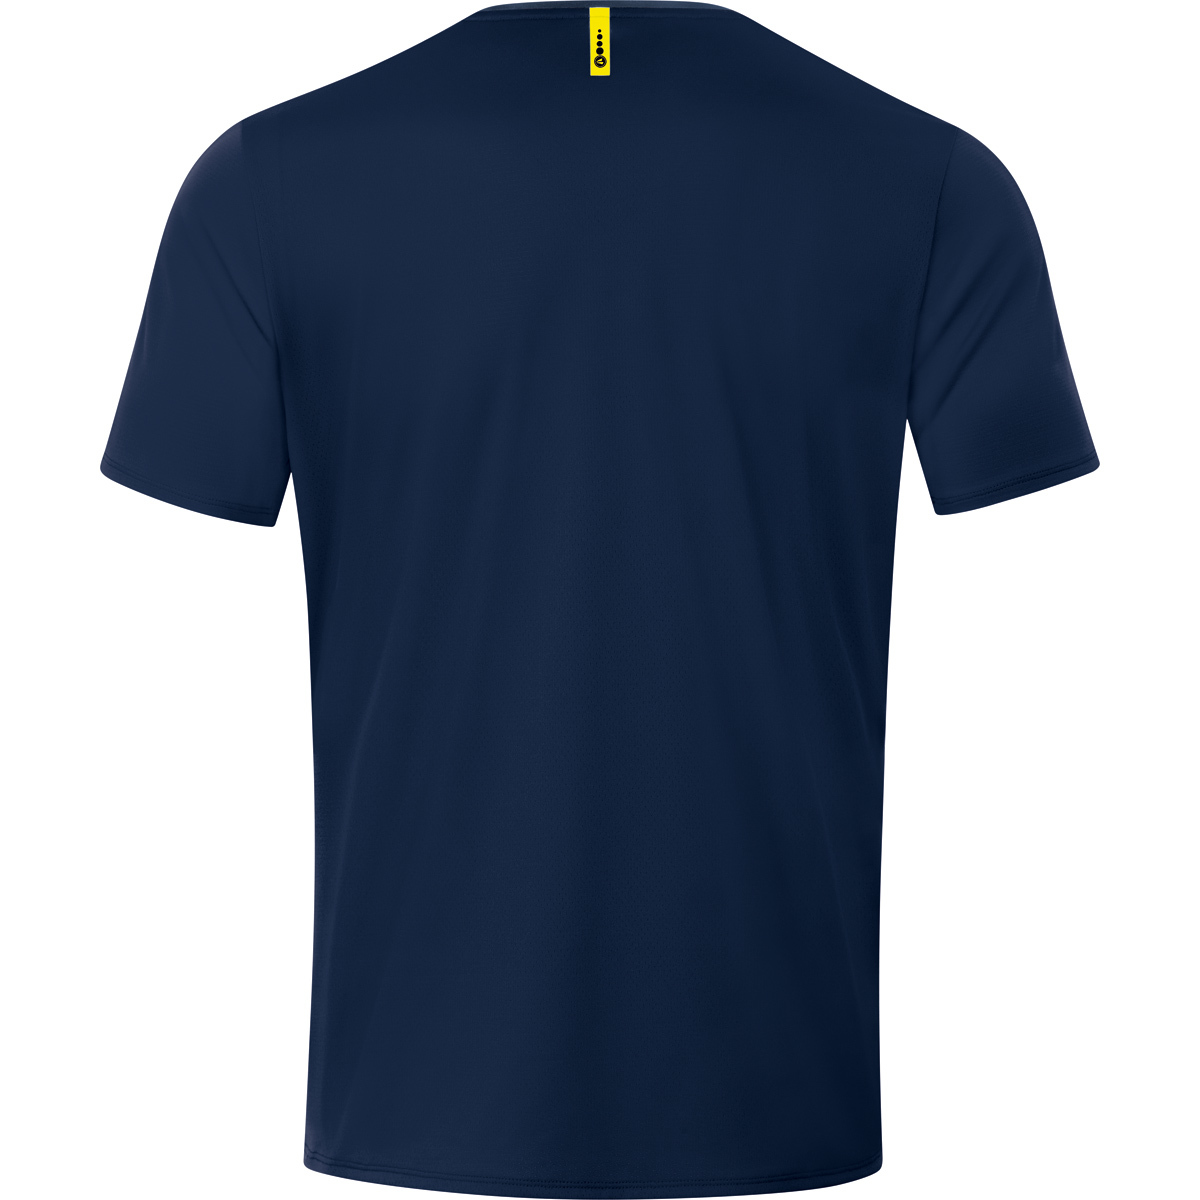 marine/darkblue/neongelb, 6120 S, Herren, T-Shirt 2.0 Champ JAKO Gr.